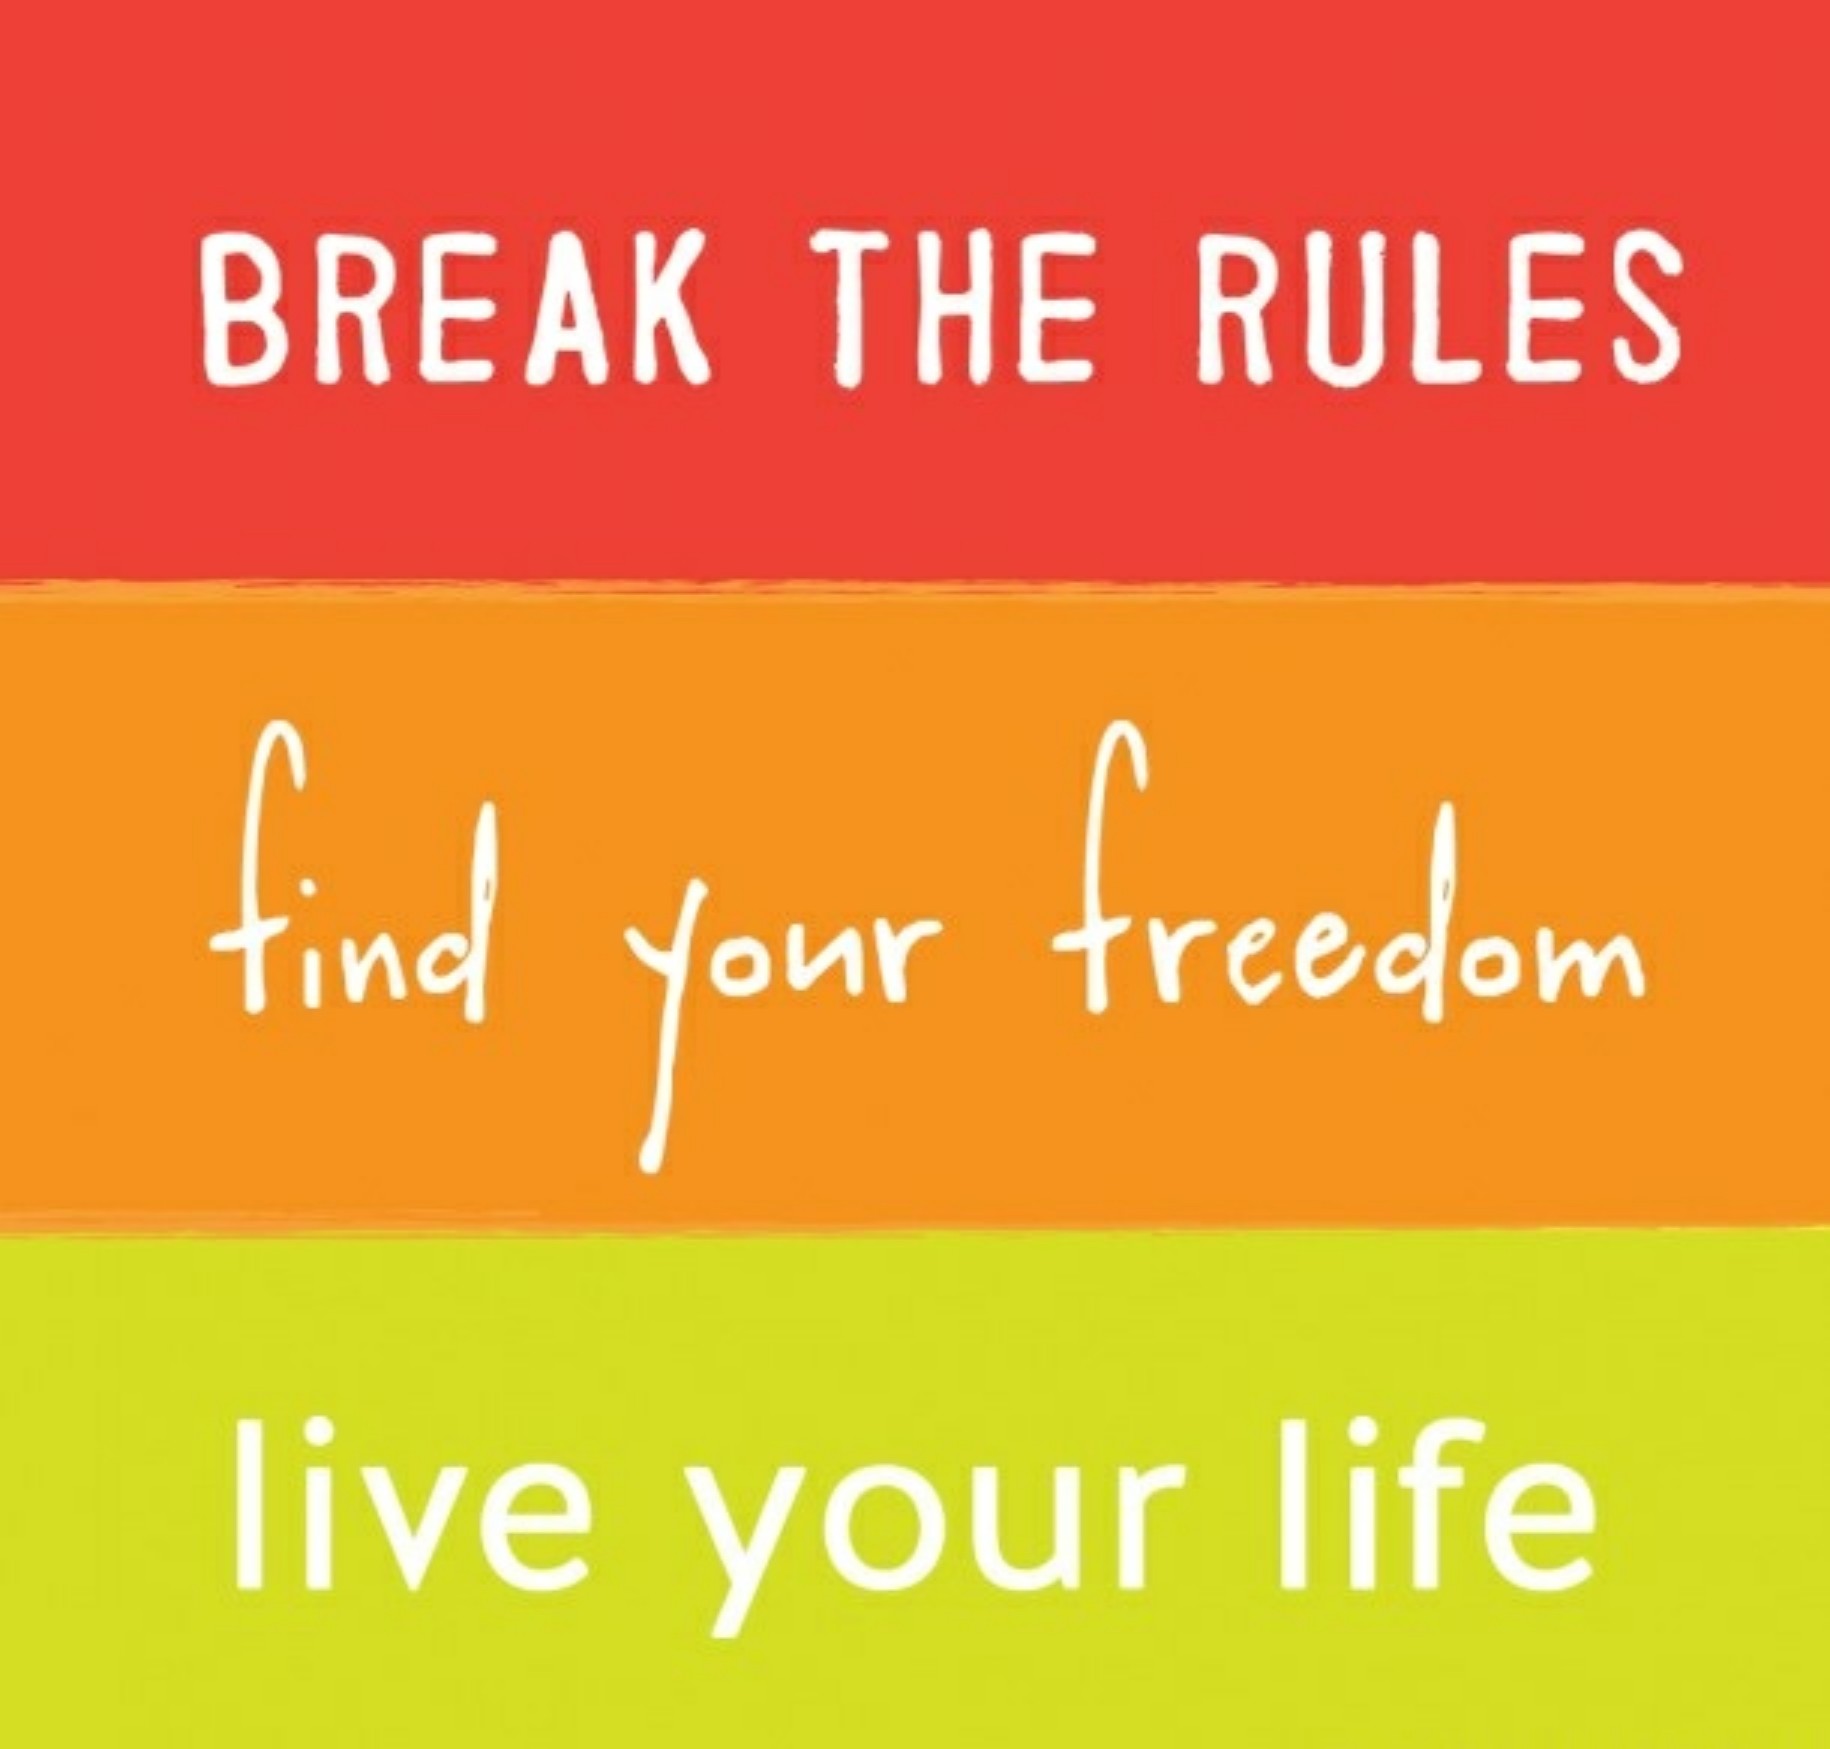 Your life your rules. Live your Life. Your Life Rules way краска. Break the Rules кресло.